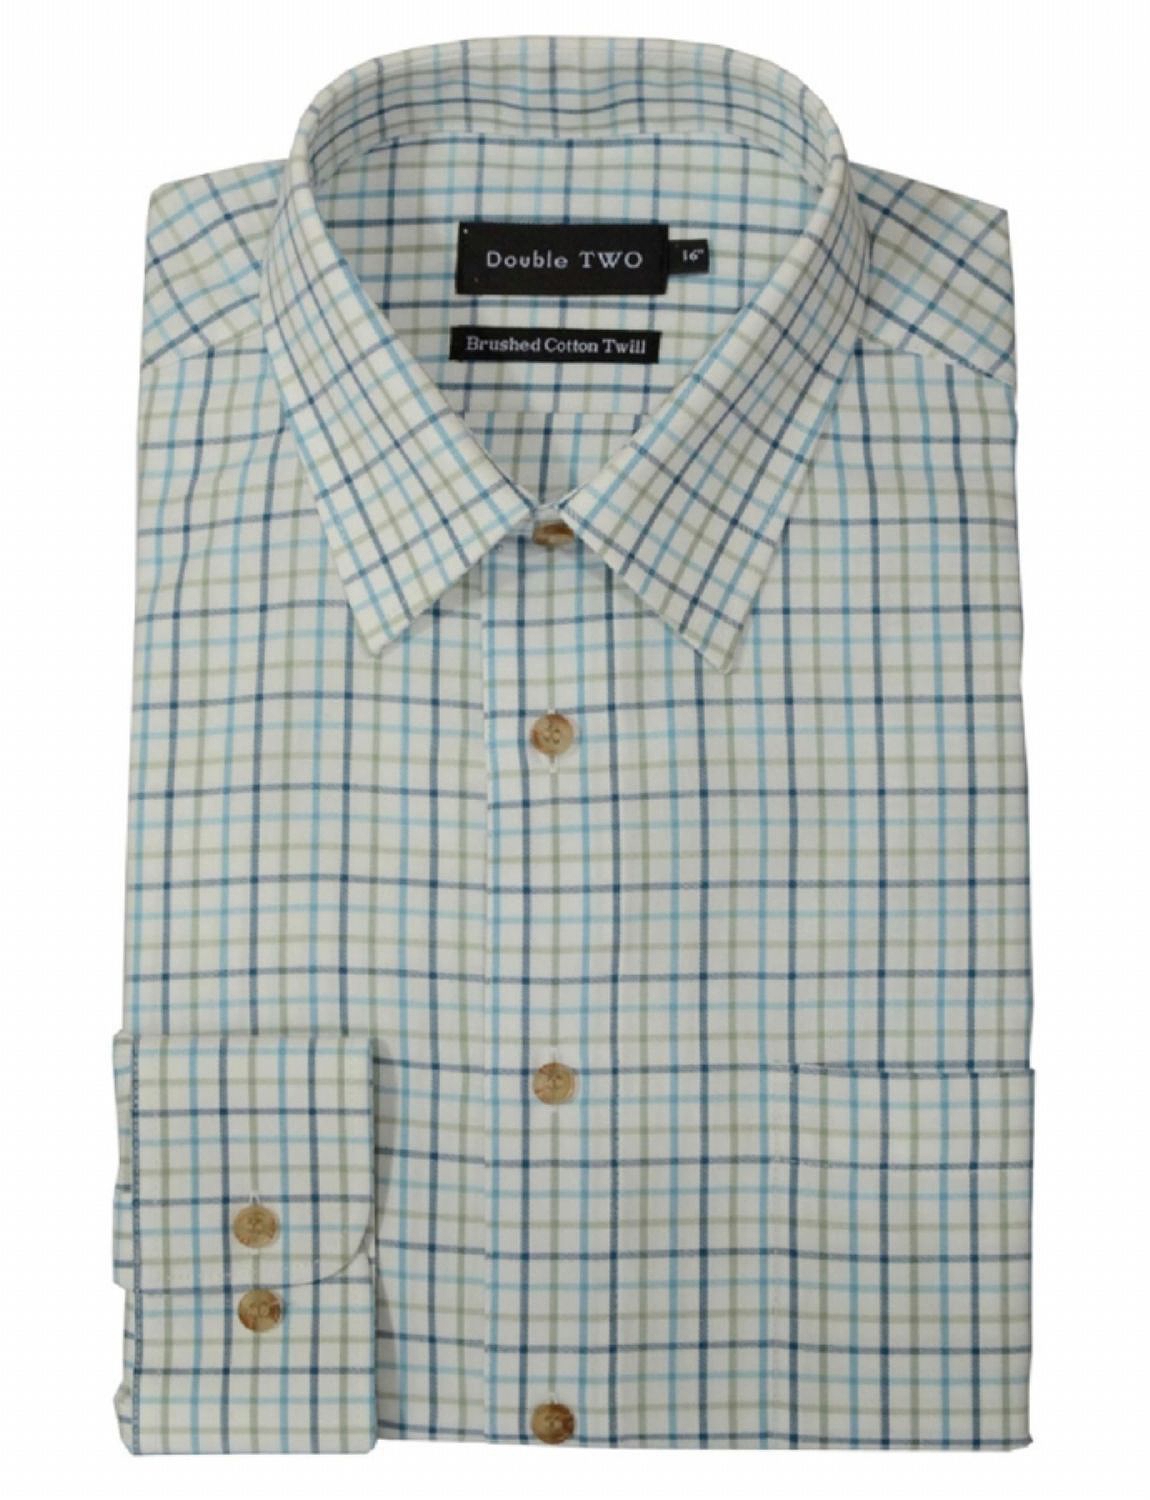 Double Two Classic Tattersall Check Shirt - Menswear Shirts & Tops